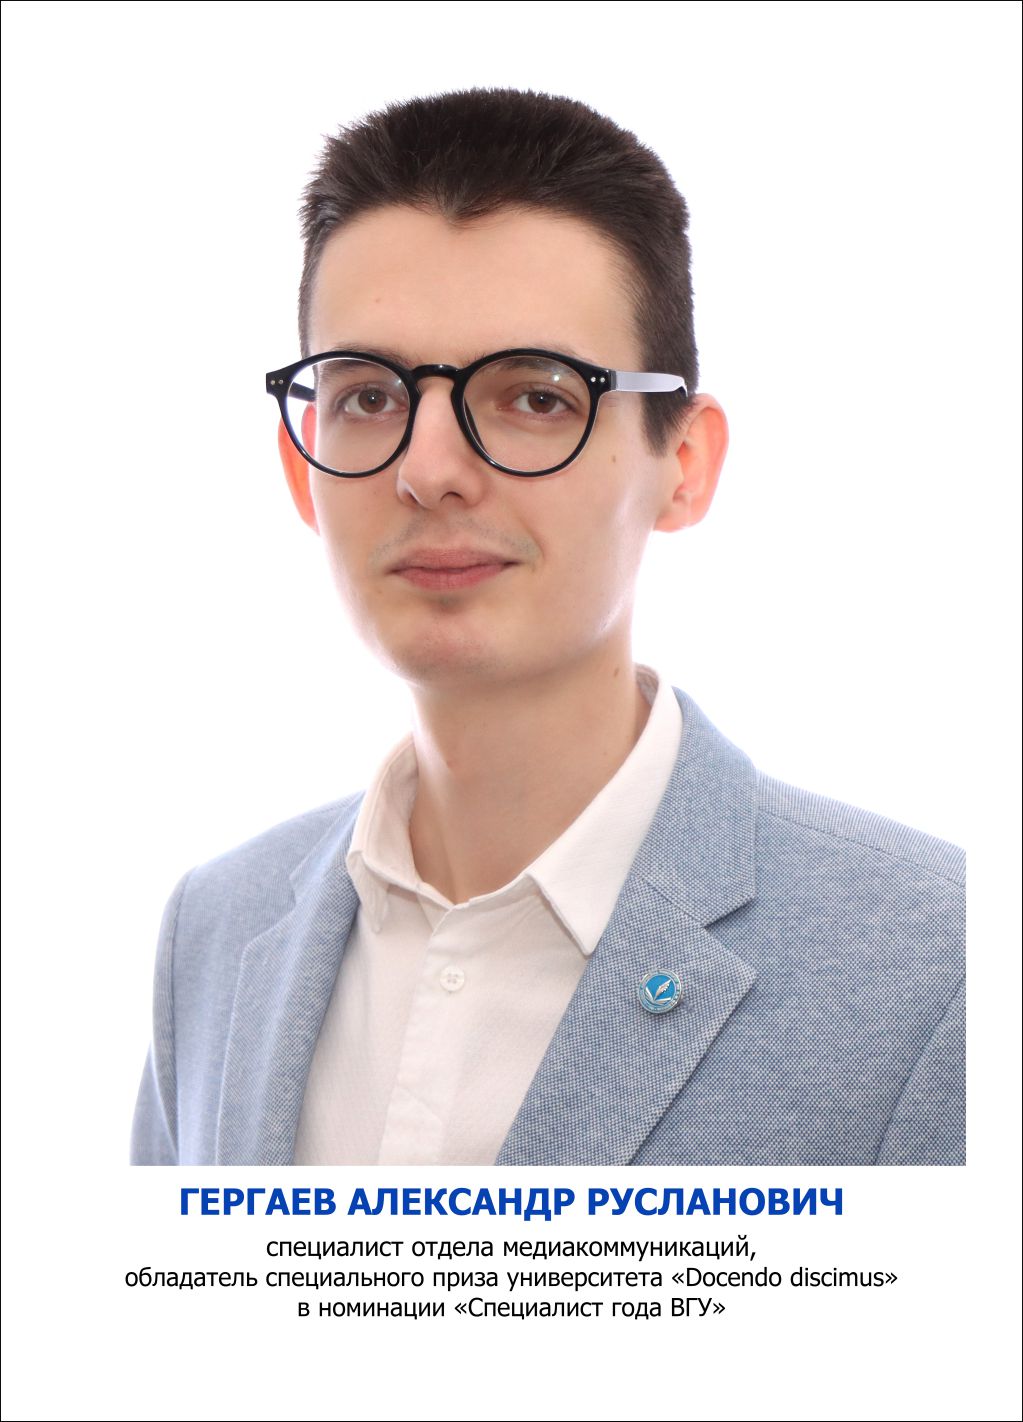 Гергаев Александр Русланович